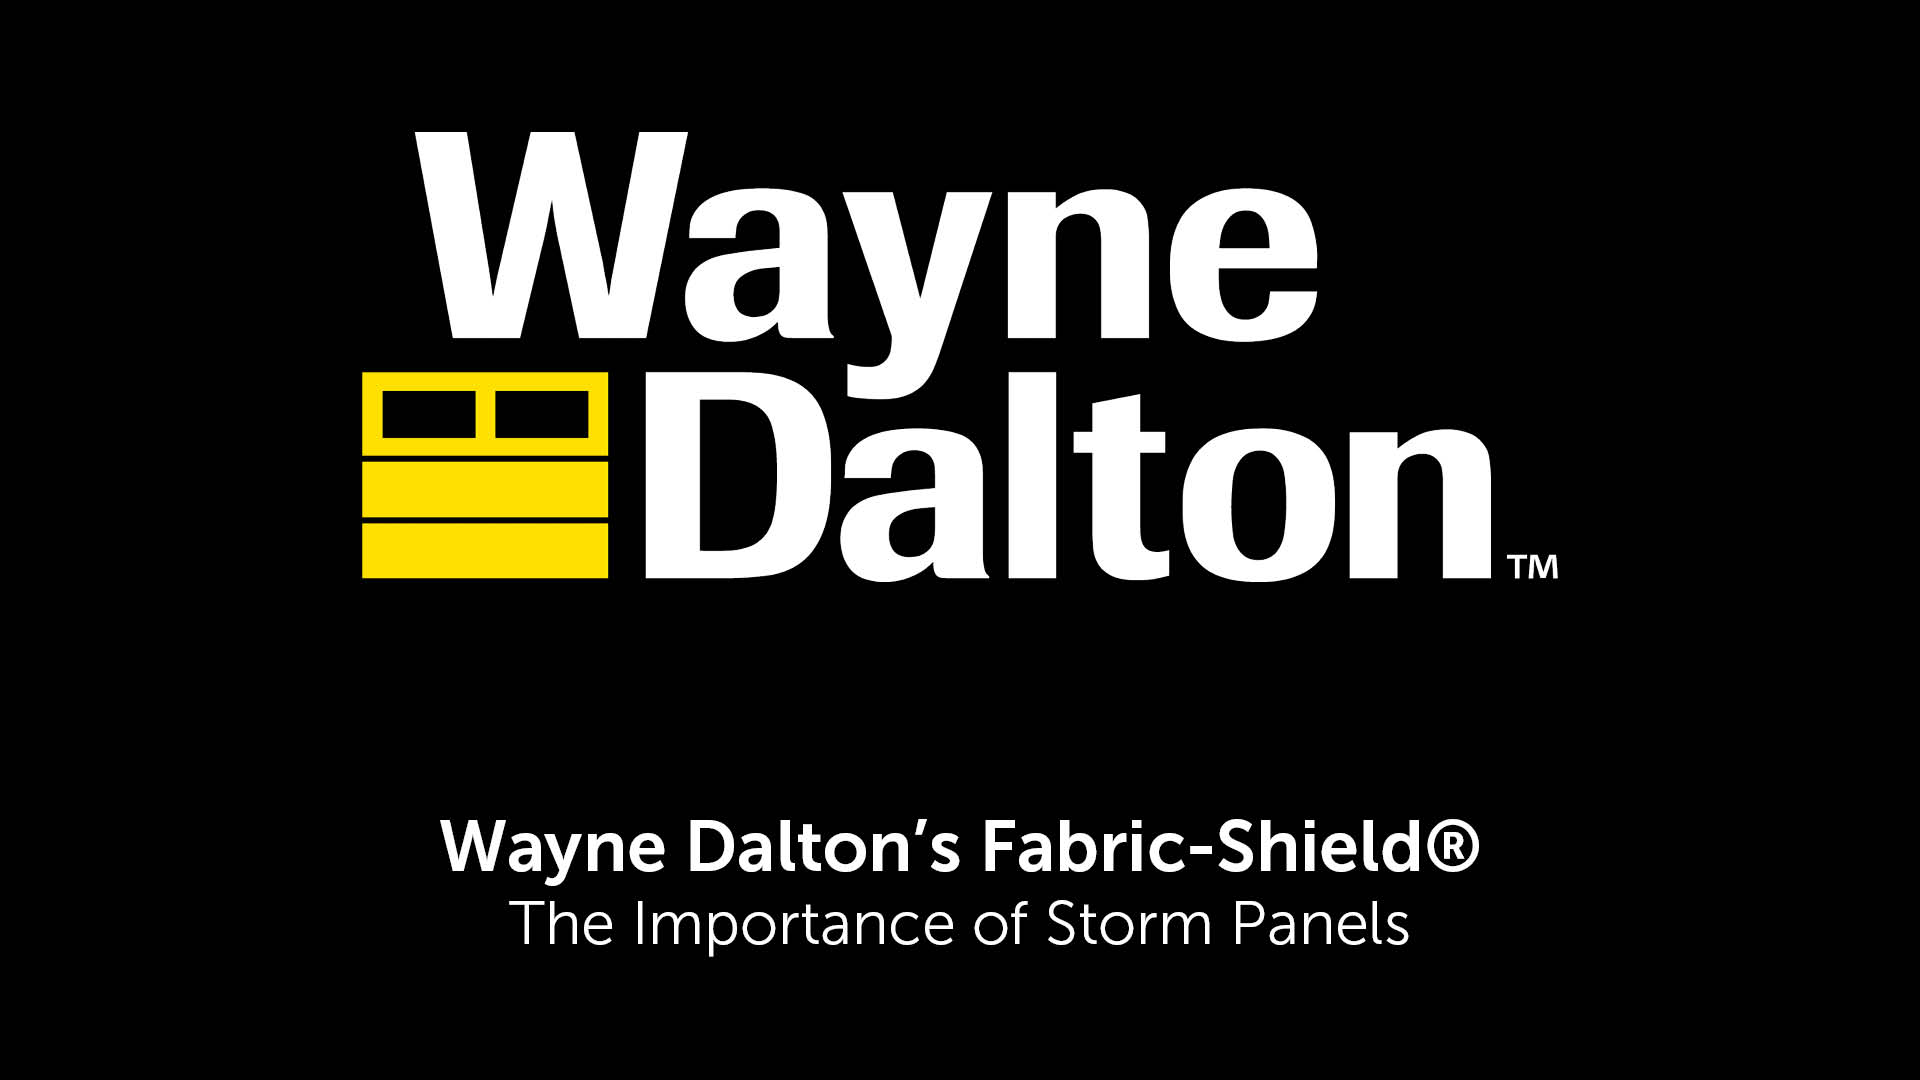 wayne dalton video thumbnail about fabric shield storm panels